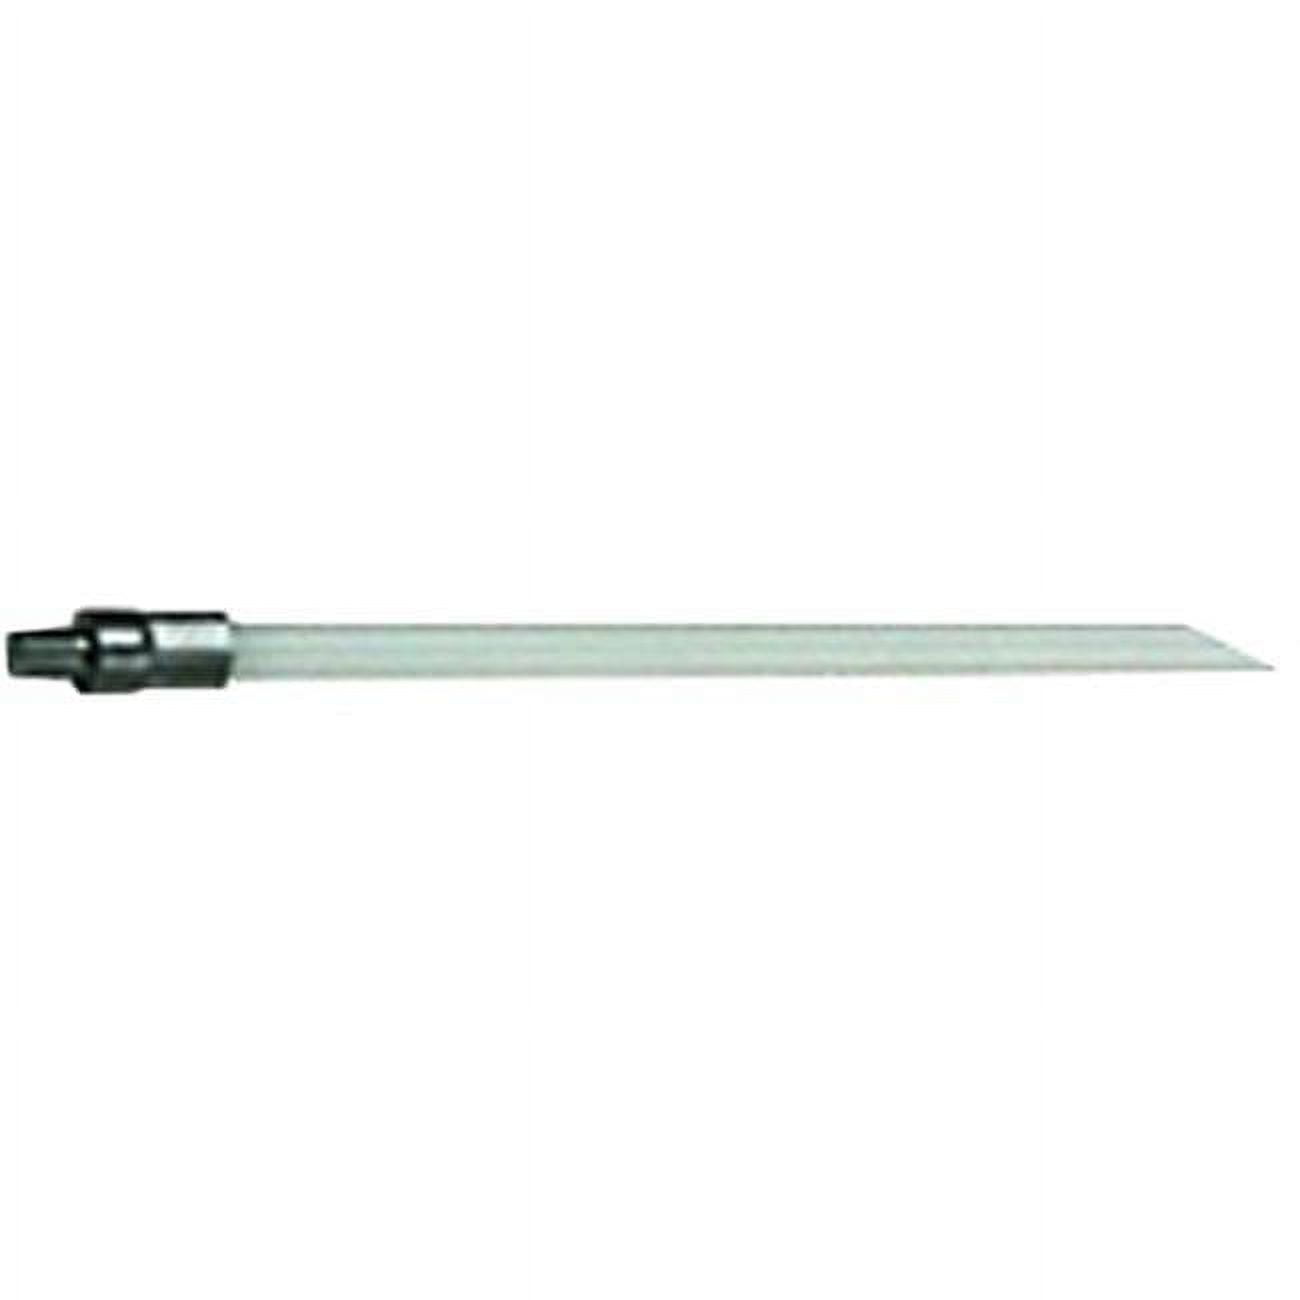 65012 Flexible Extension Rod For Pellet Stove Brushes